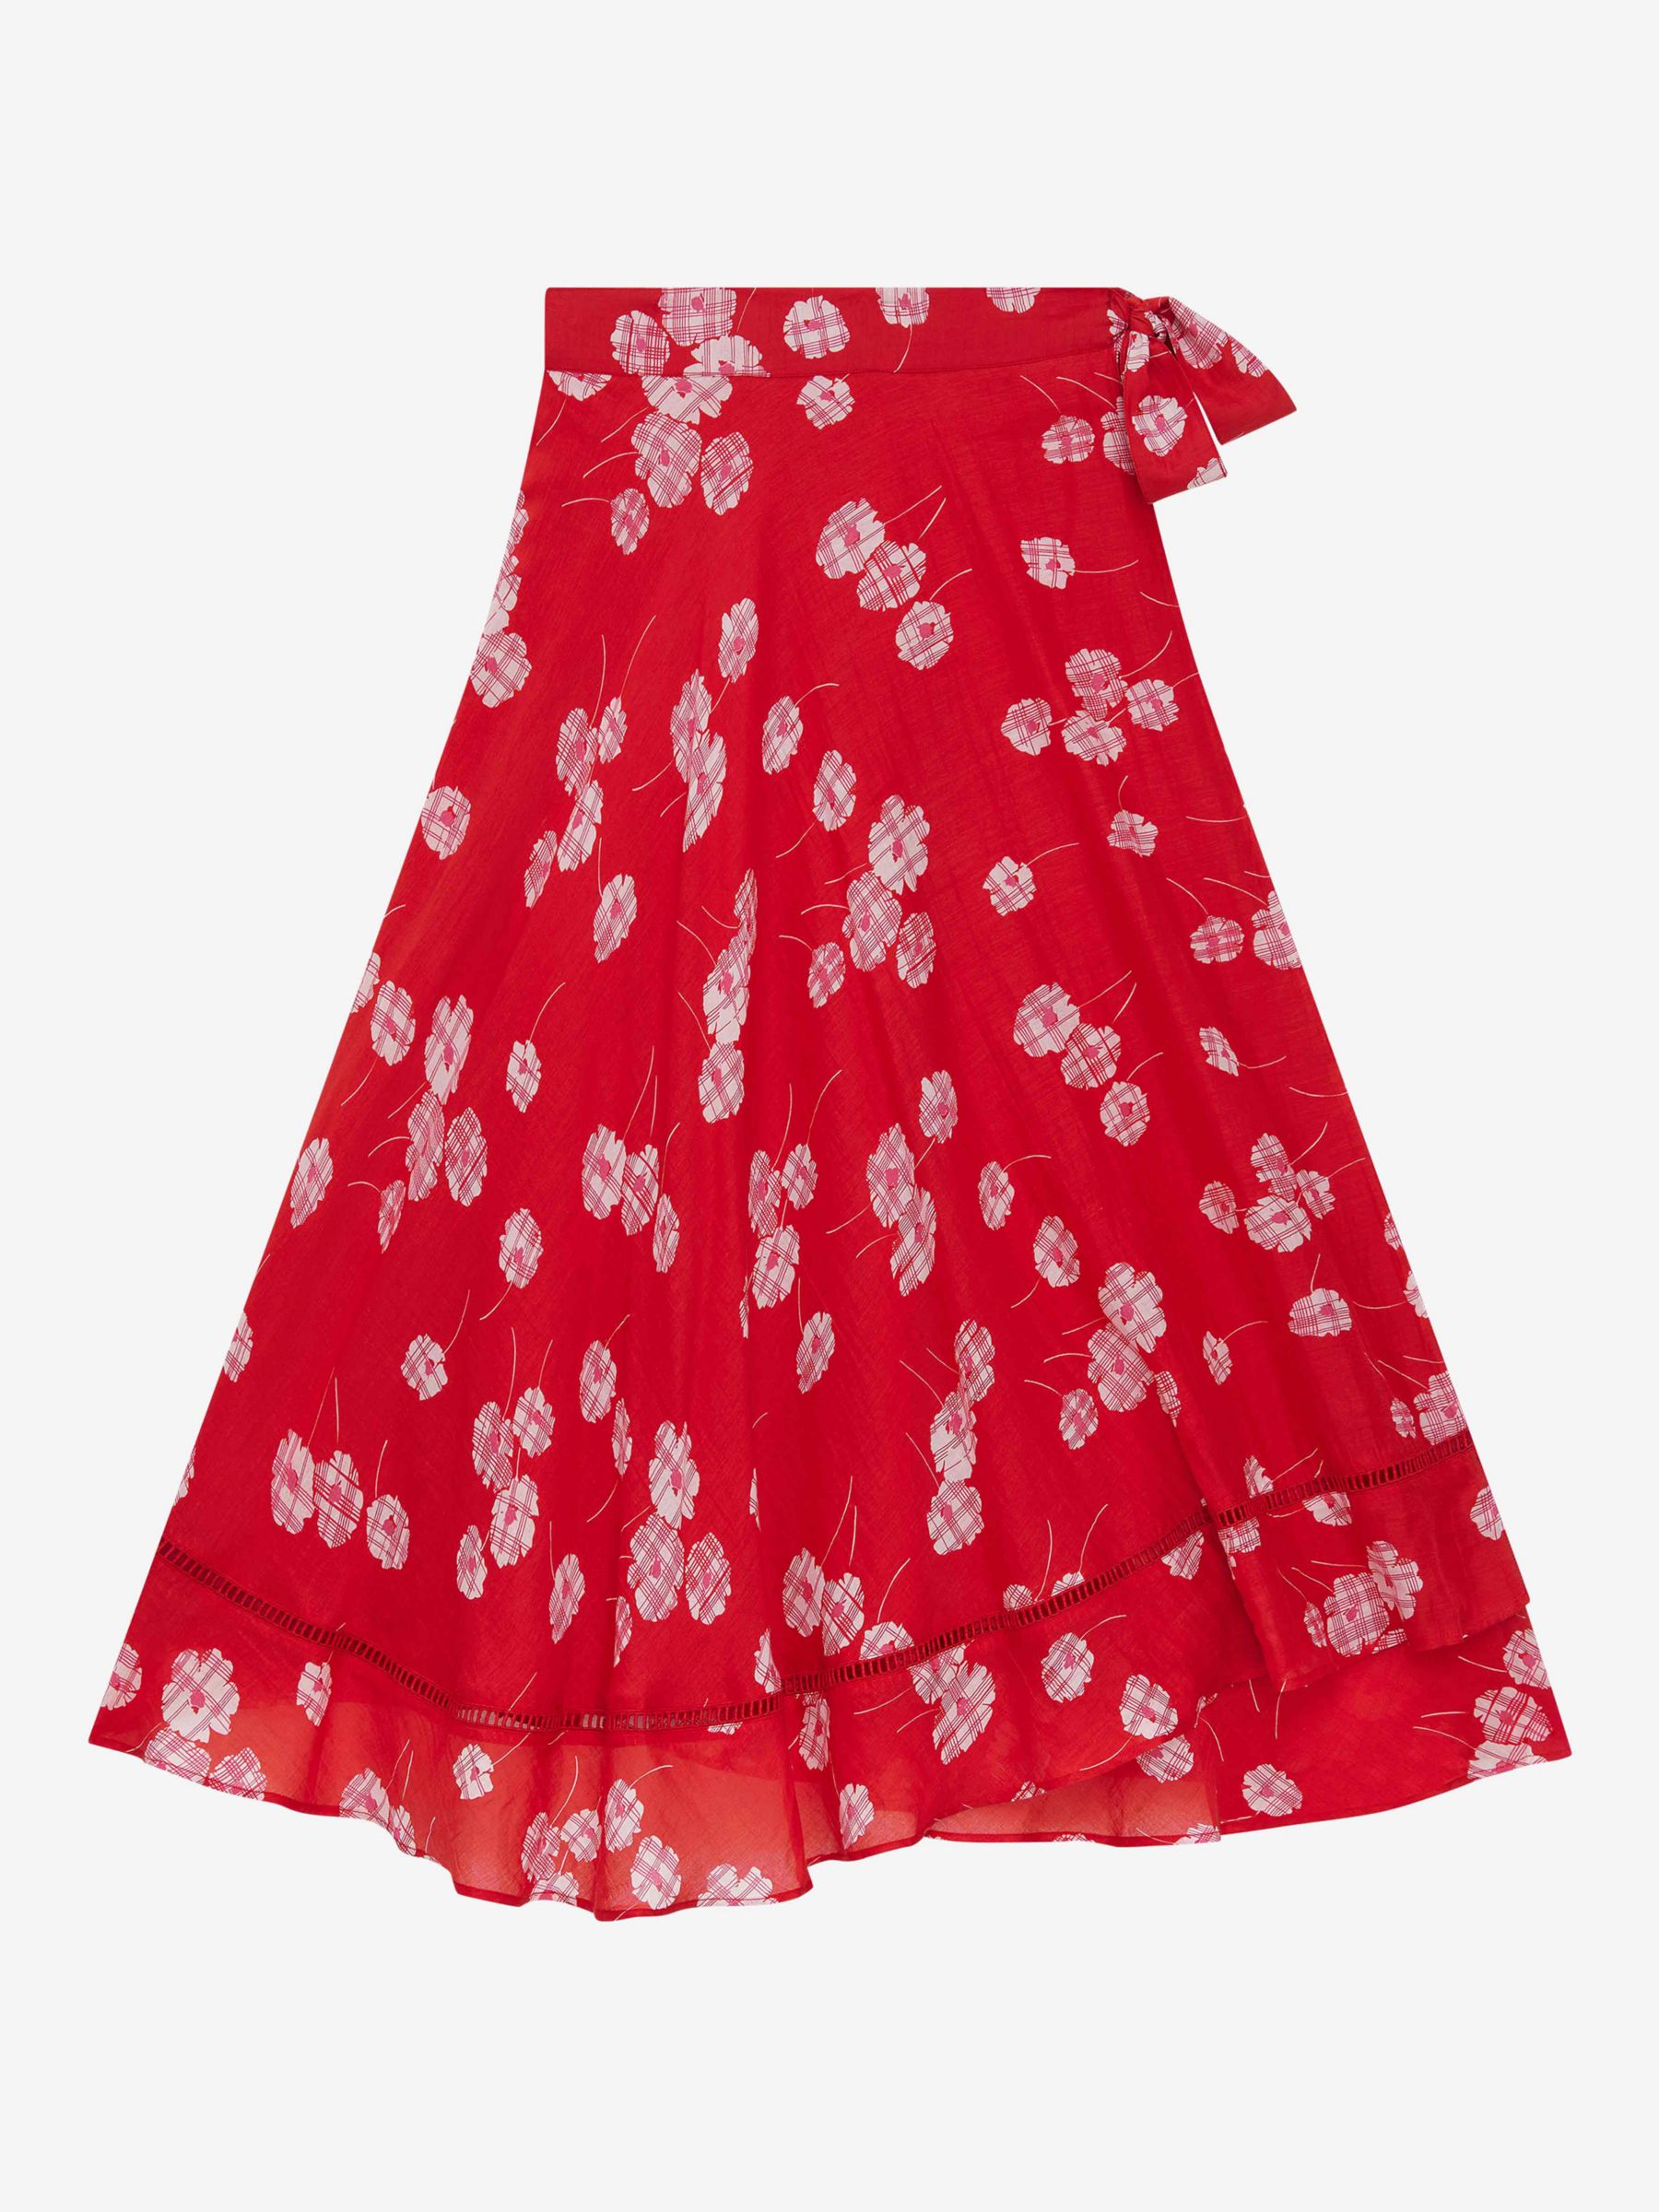 Brora Silk Cotton Blend Graphic Daisy Print Wrap Midi Skirt, Ruby/White, 8-10